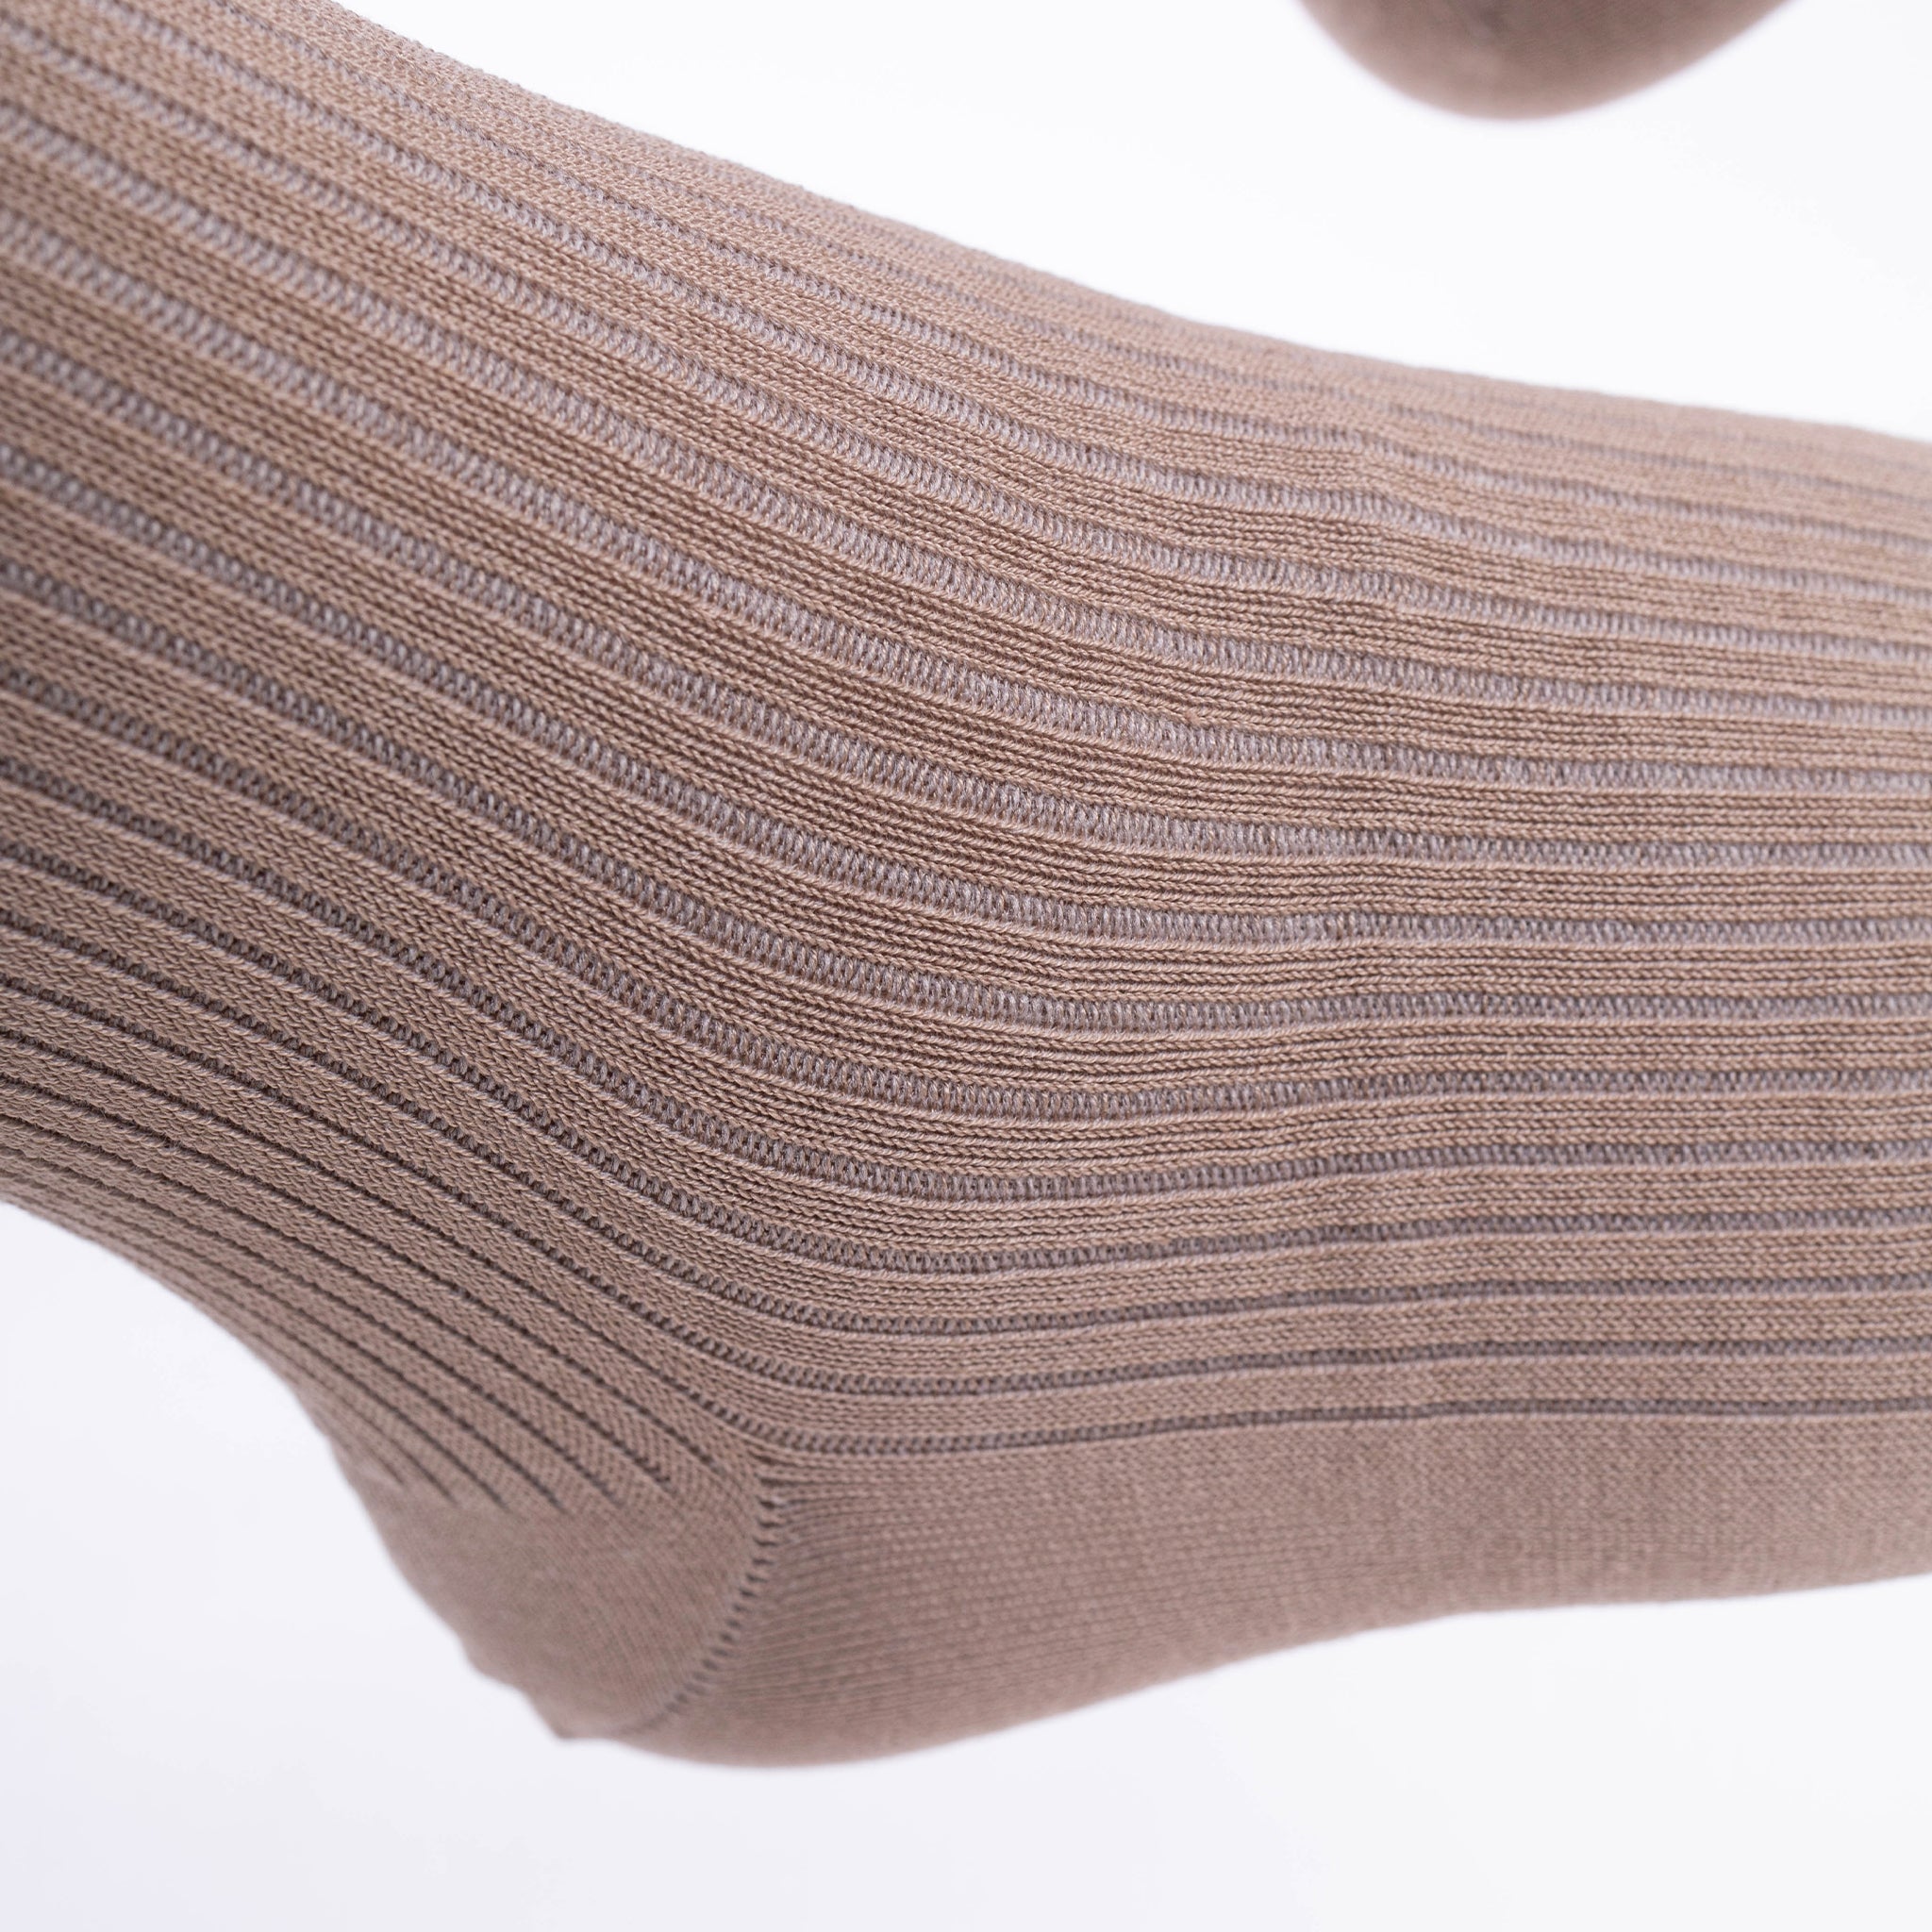 Korean Pattern Socks